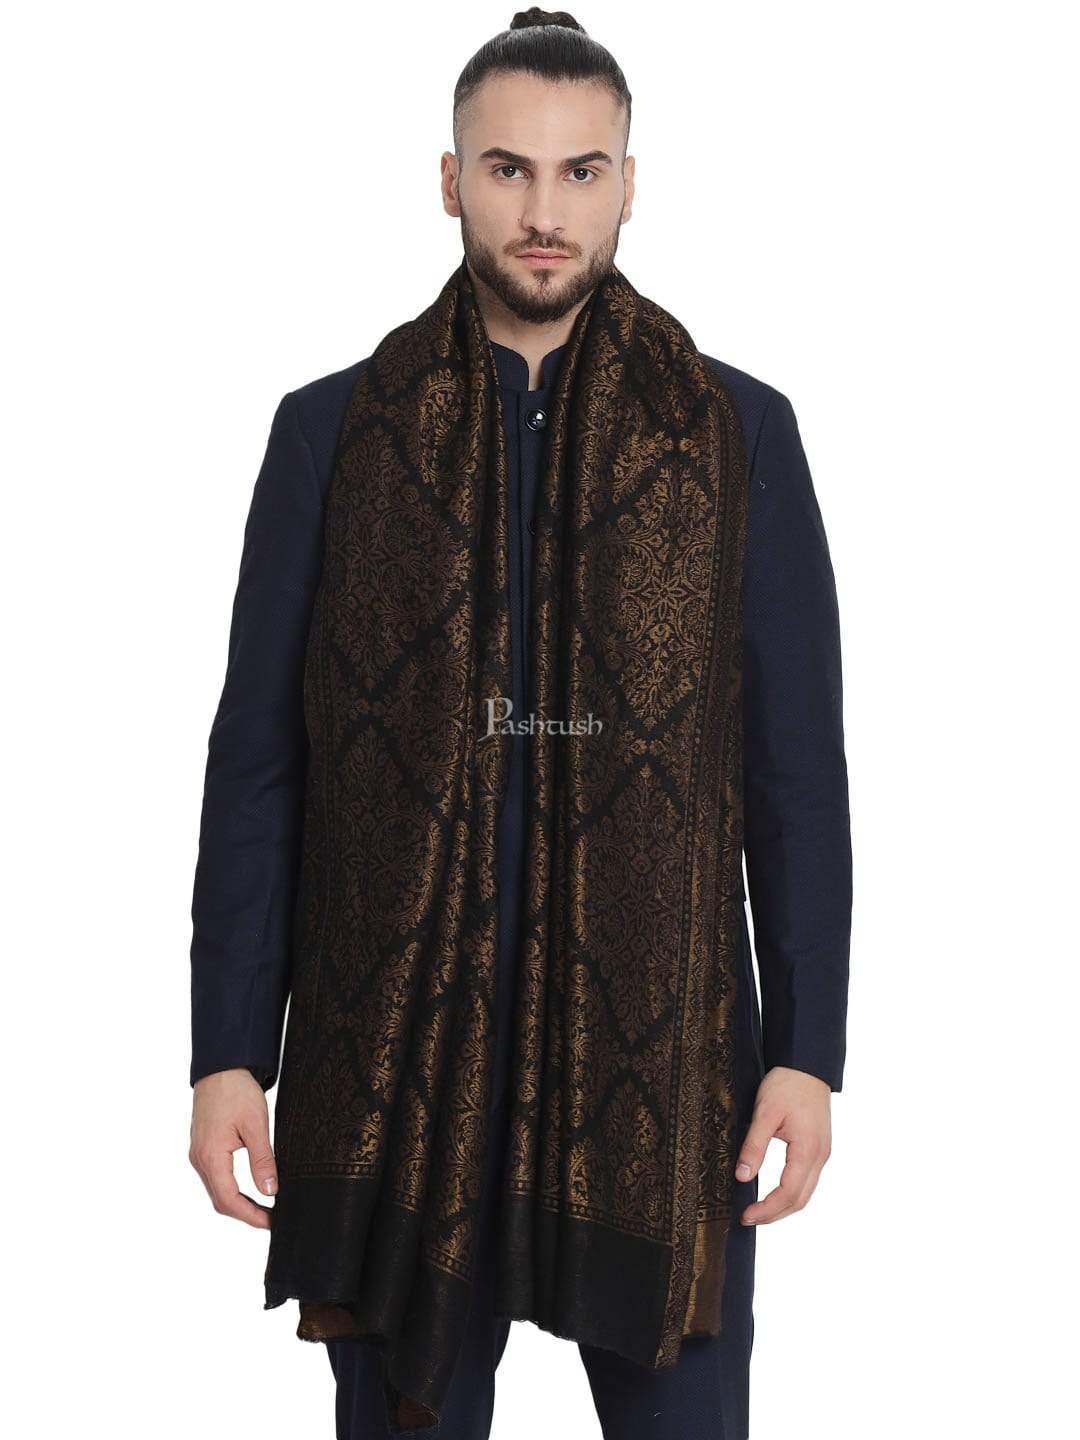 Pashtush India 70x200 Pashtush Mens Twilight Collection, Jacquard Stole, With Metallic Thread Weave, Fine Wool